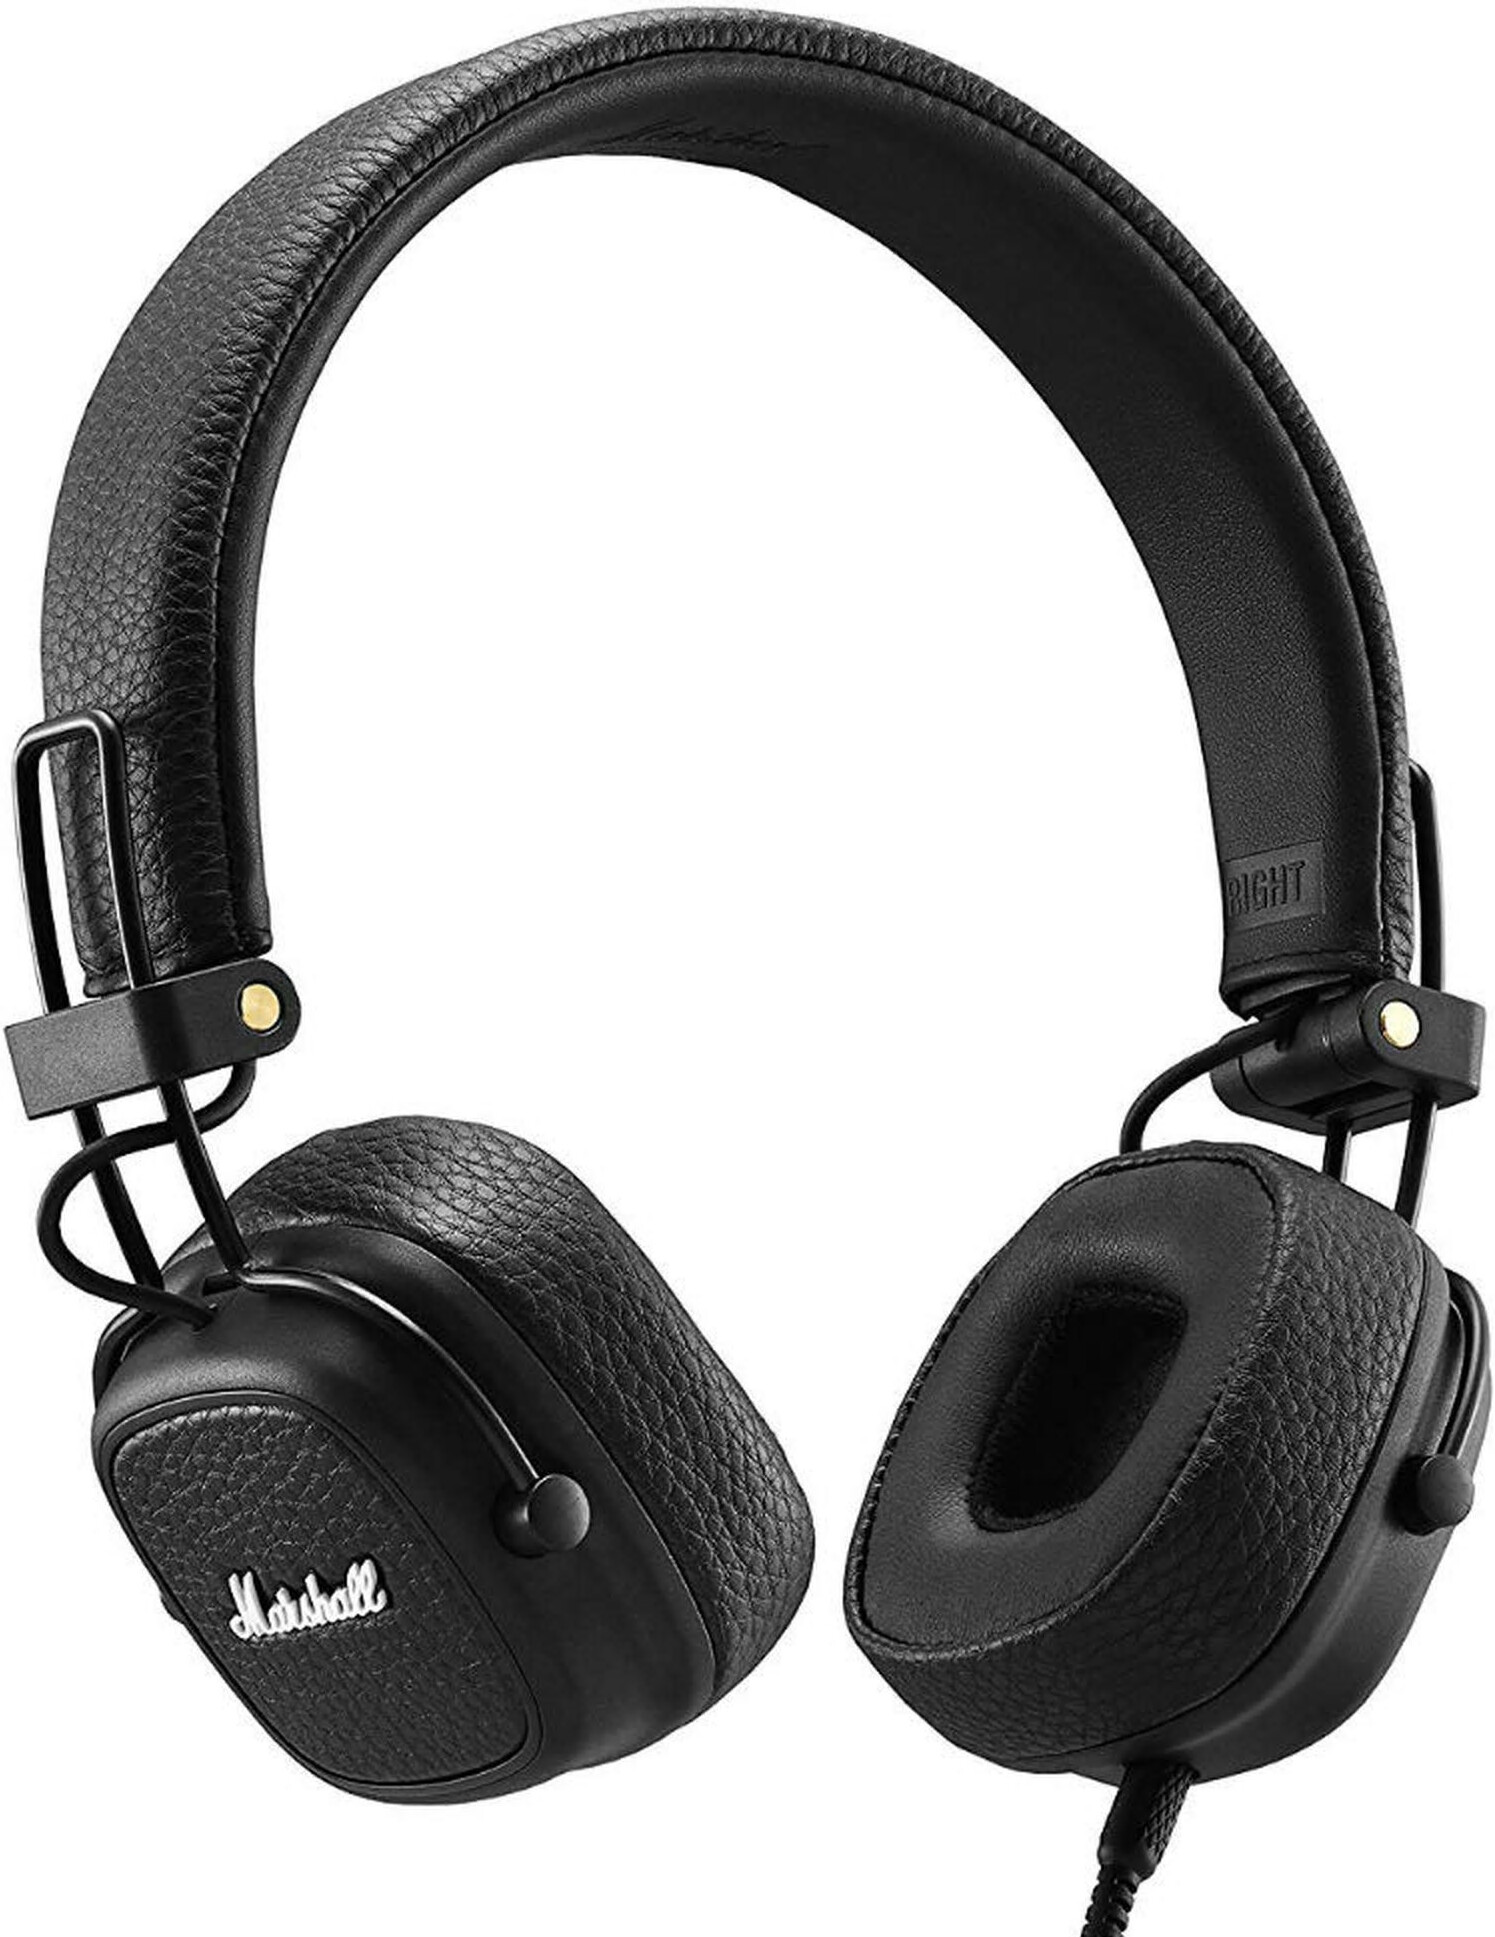 Marshall Major III Wireless On-ear Headset